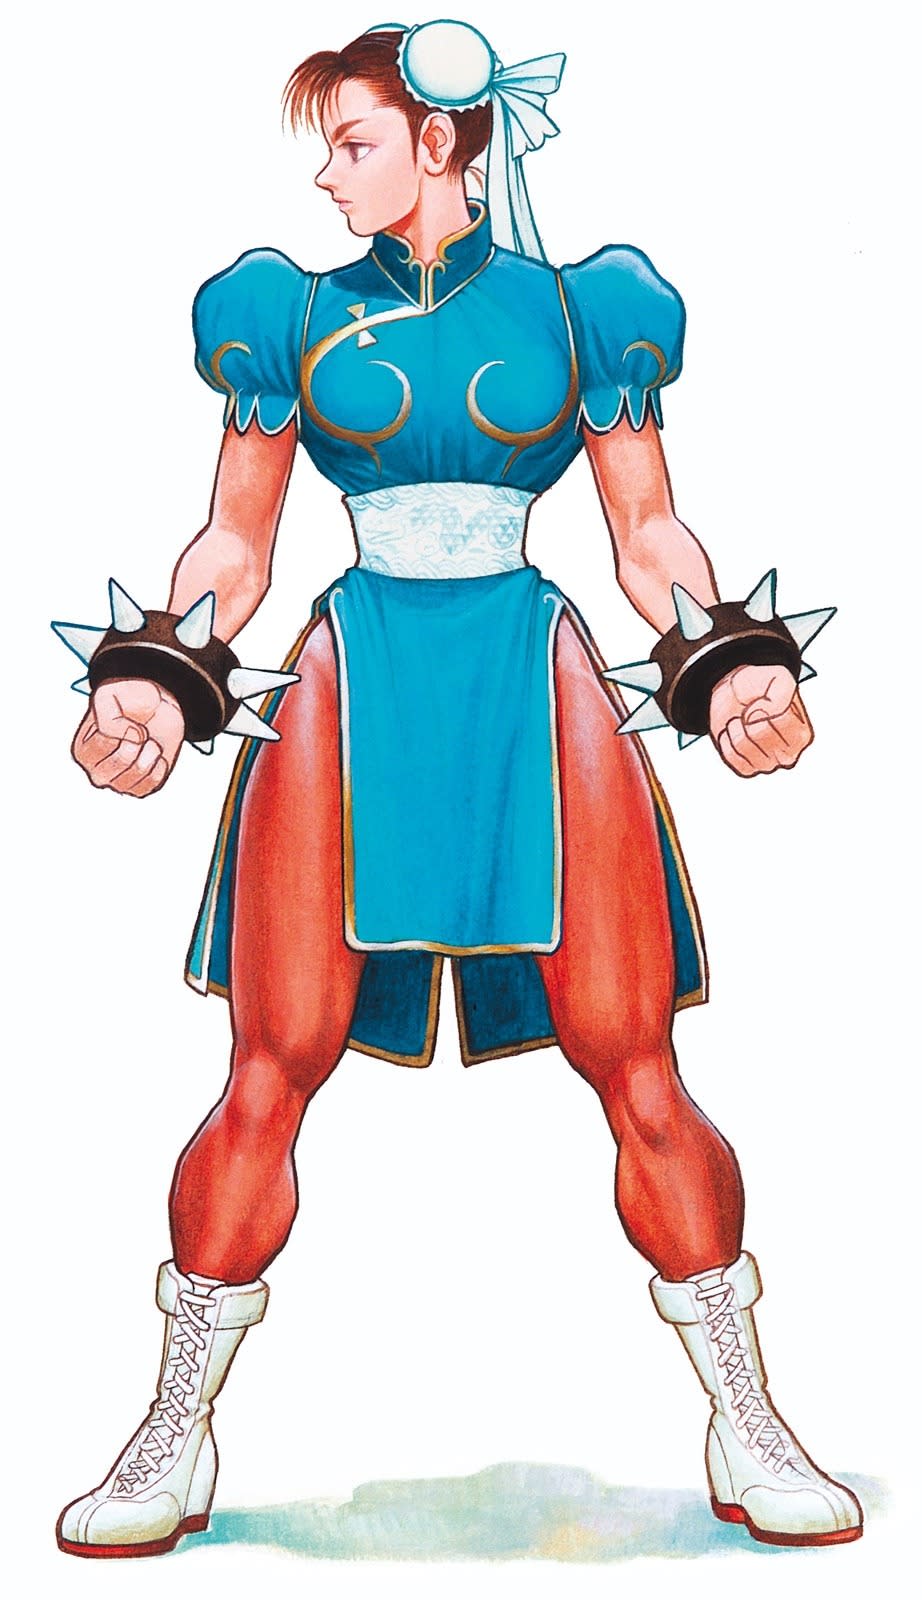 Chun-Li (Street Fighter II) 